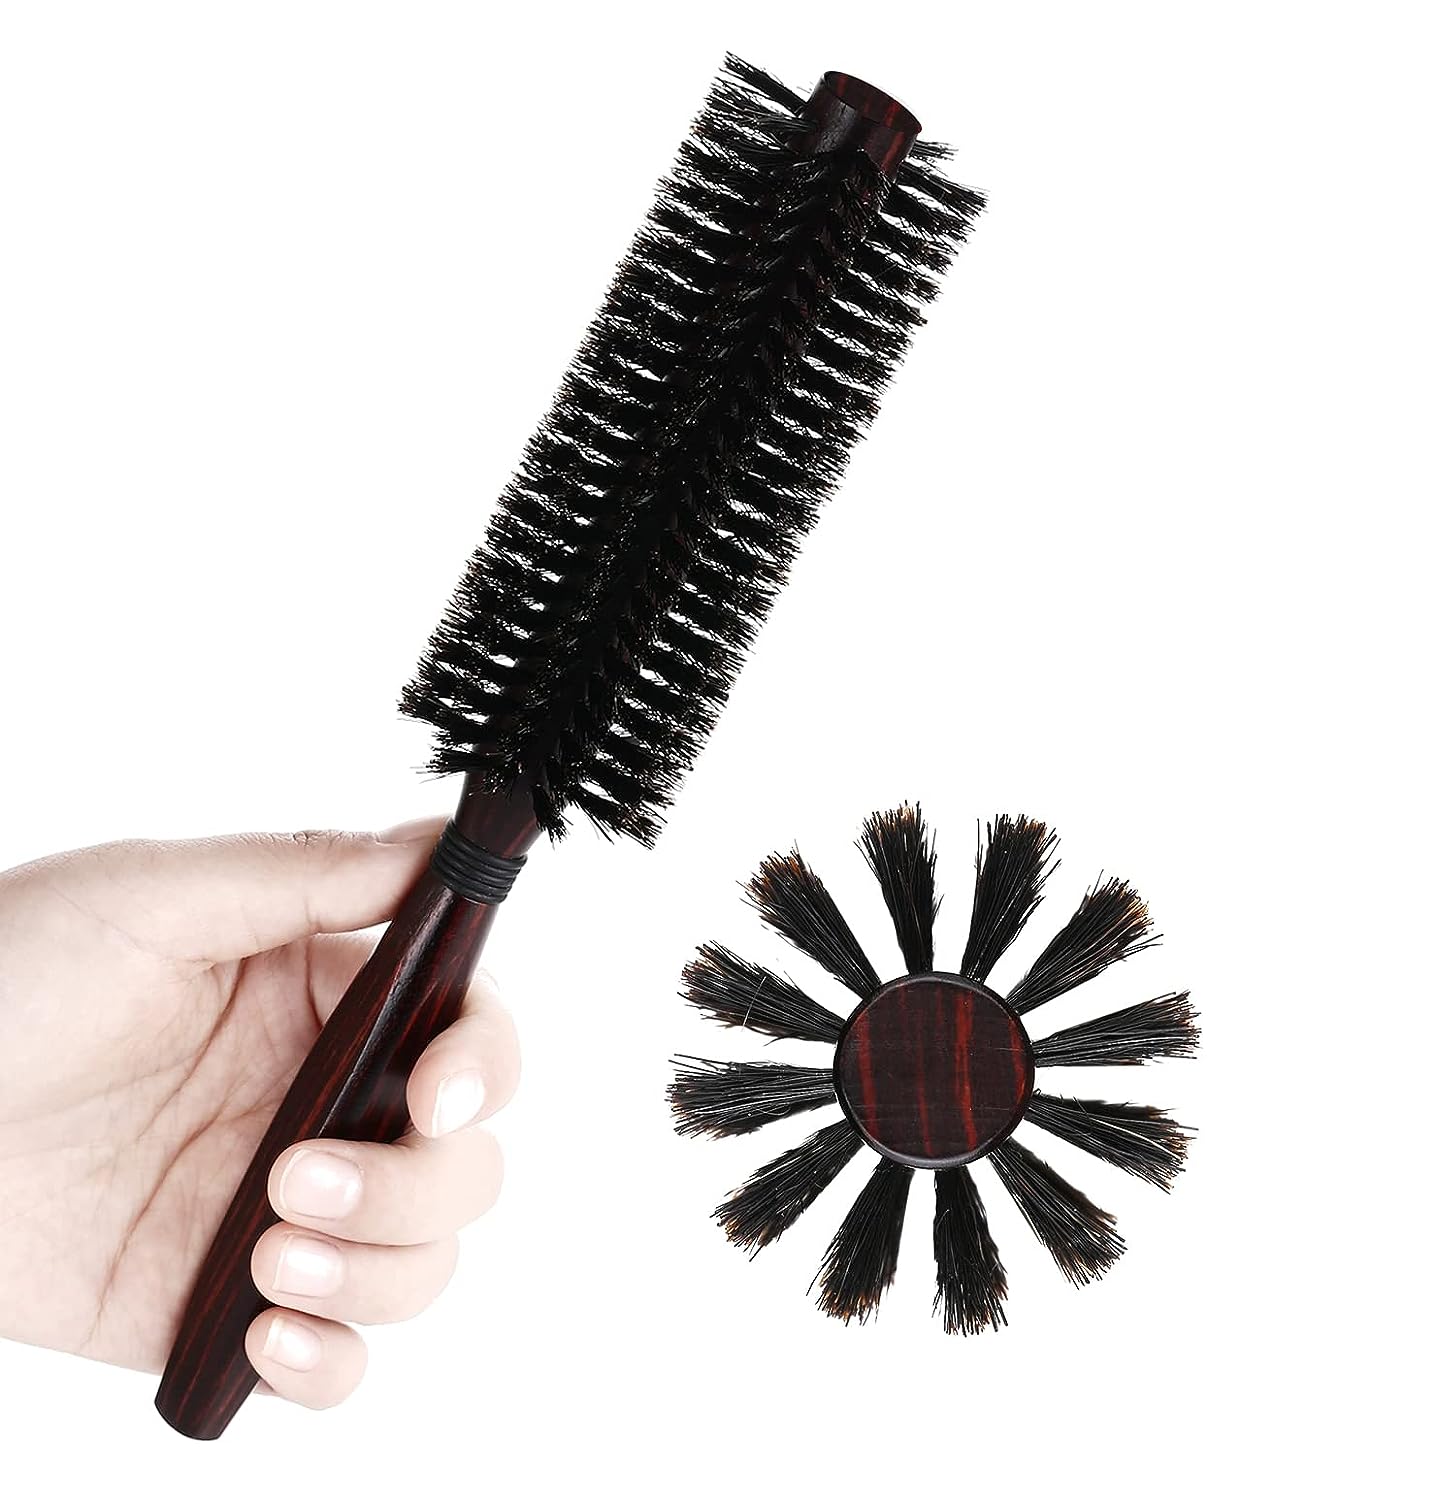 Round Boar Bristle Hair Brush-1.8 Inch, Blow Drying & [...]